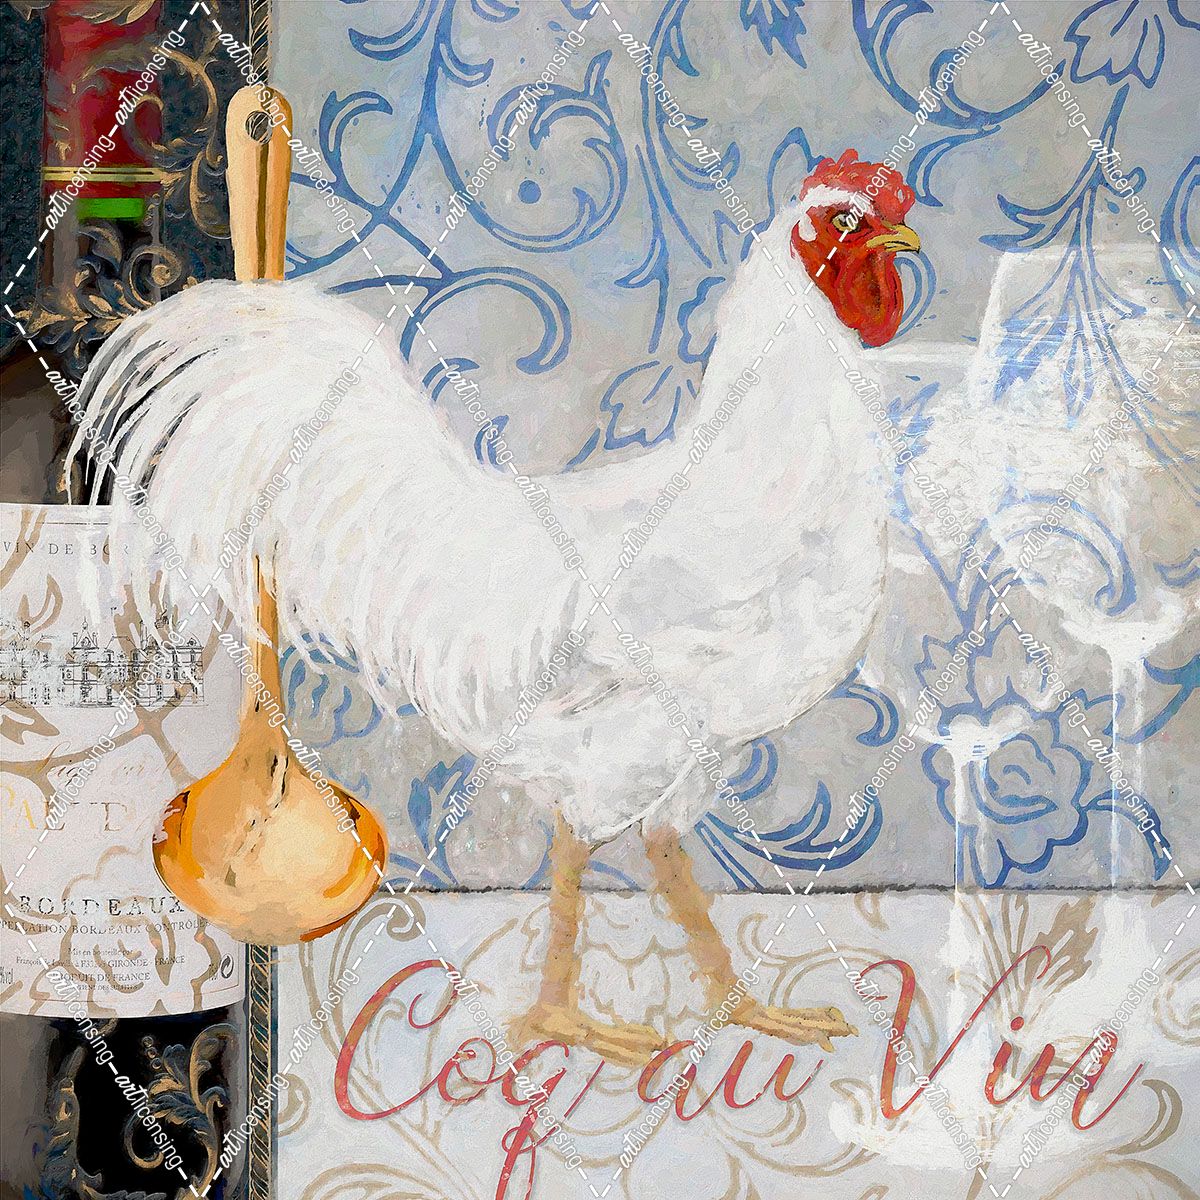 Food And Wine – Coq Au Vin